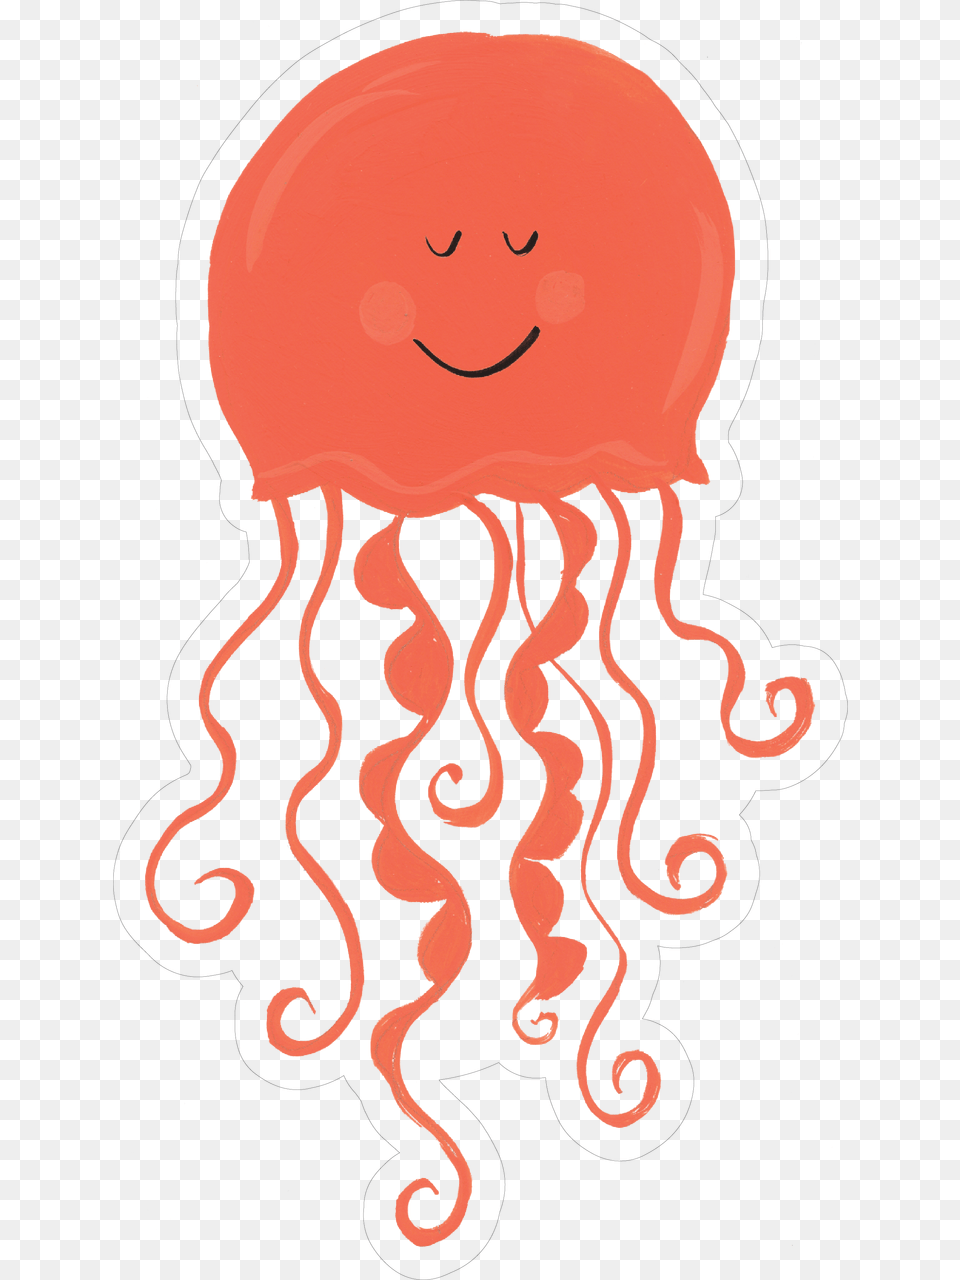 Illustration, Animal, Sea Life, Invertebrate, Jellyfish Png Image